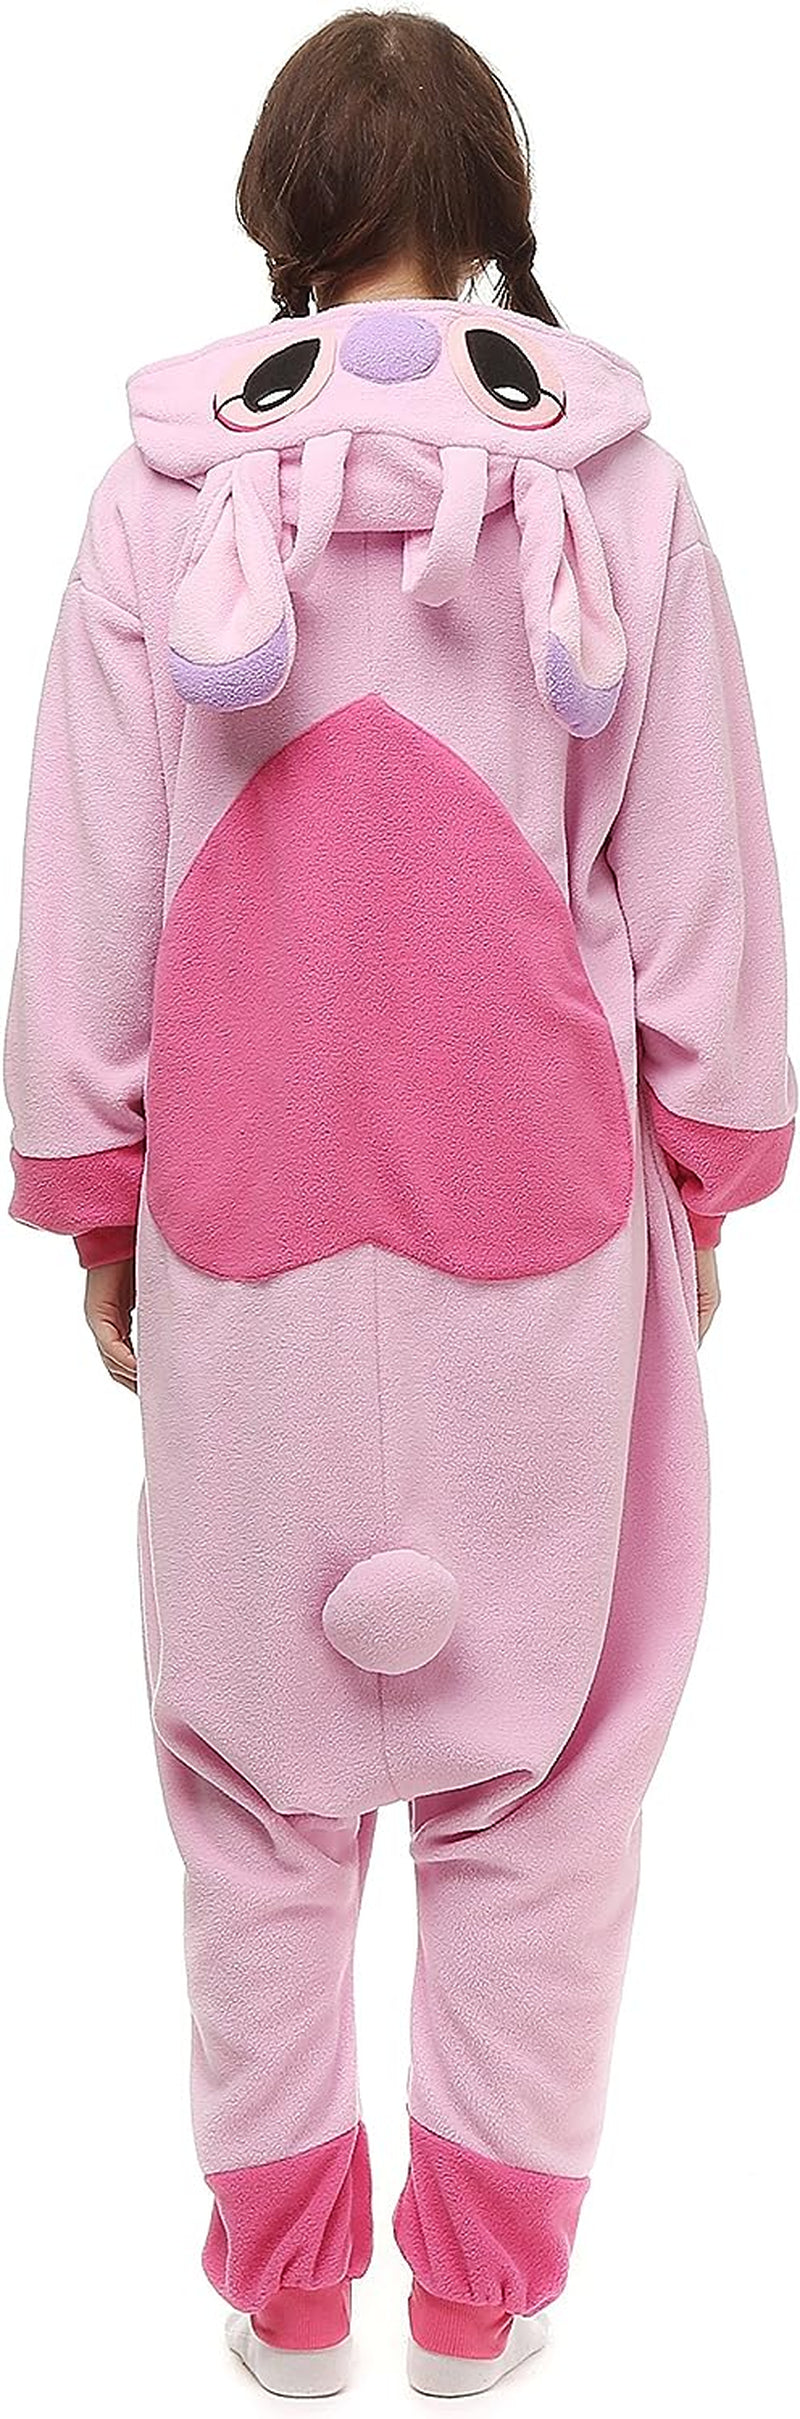 Wishliker Unisex Adult Cow Onesie Costume Halloween Cosplay Animal Pajamas One Piece